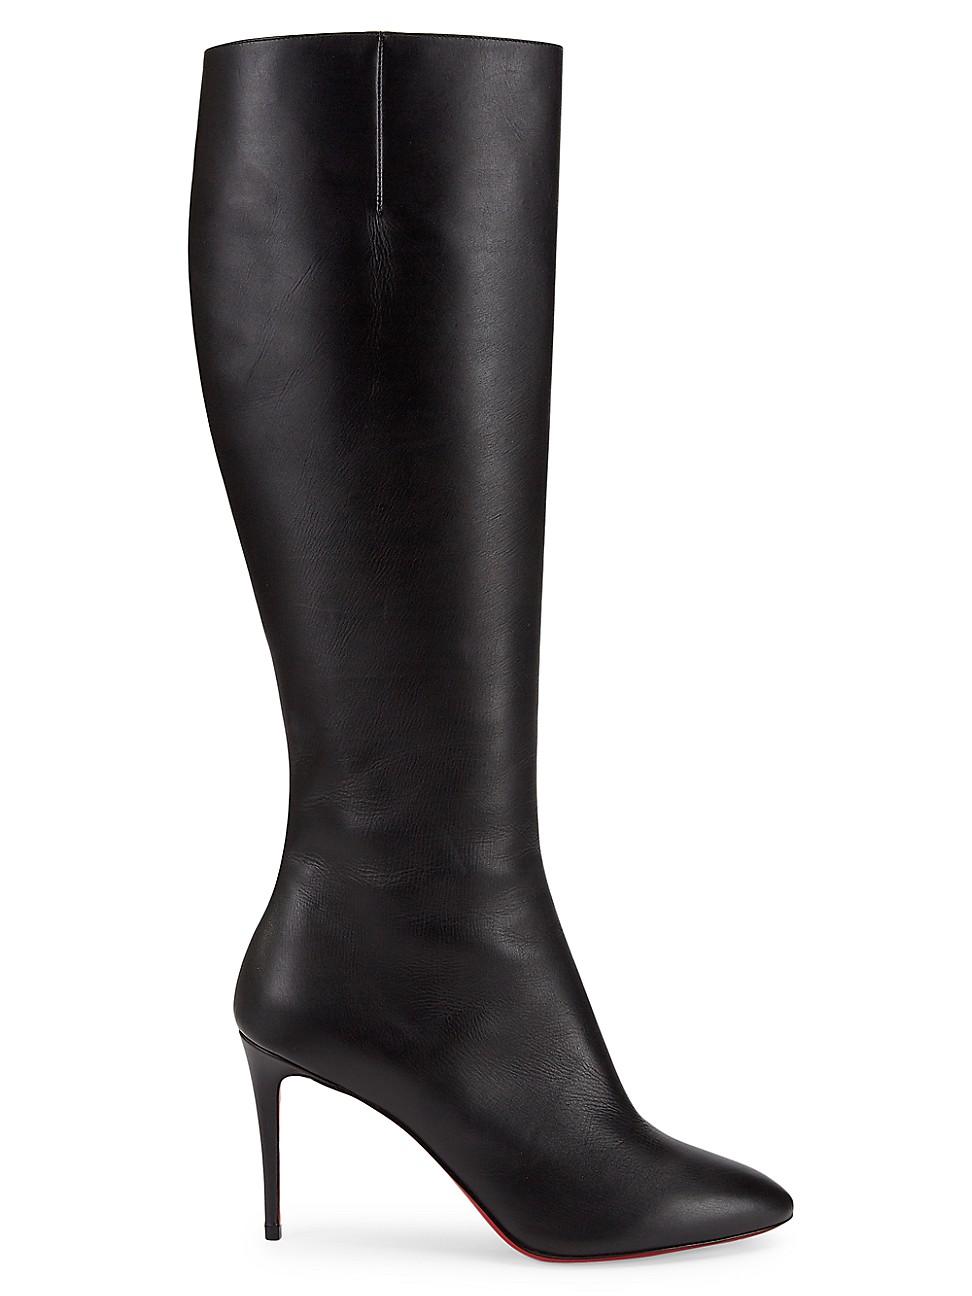 Christian Louboutin Eloise Botta Leather Boots in Black | Lyst